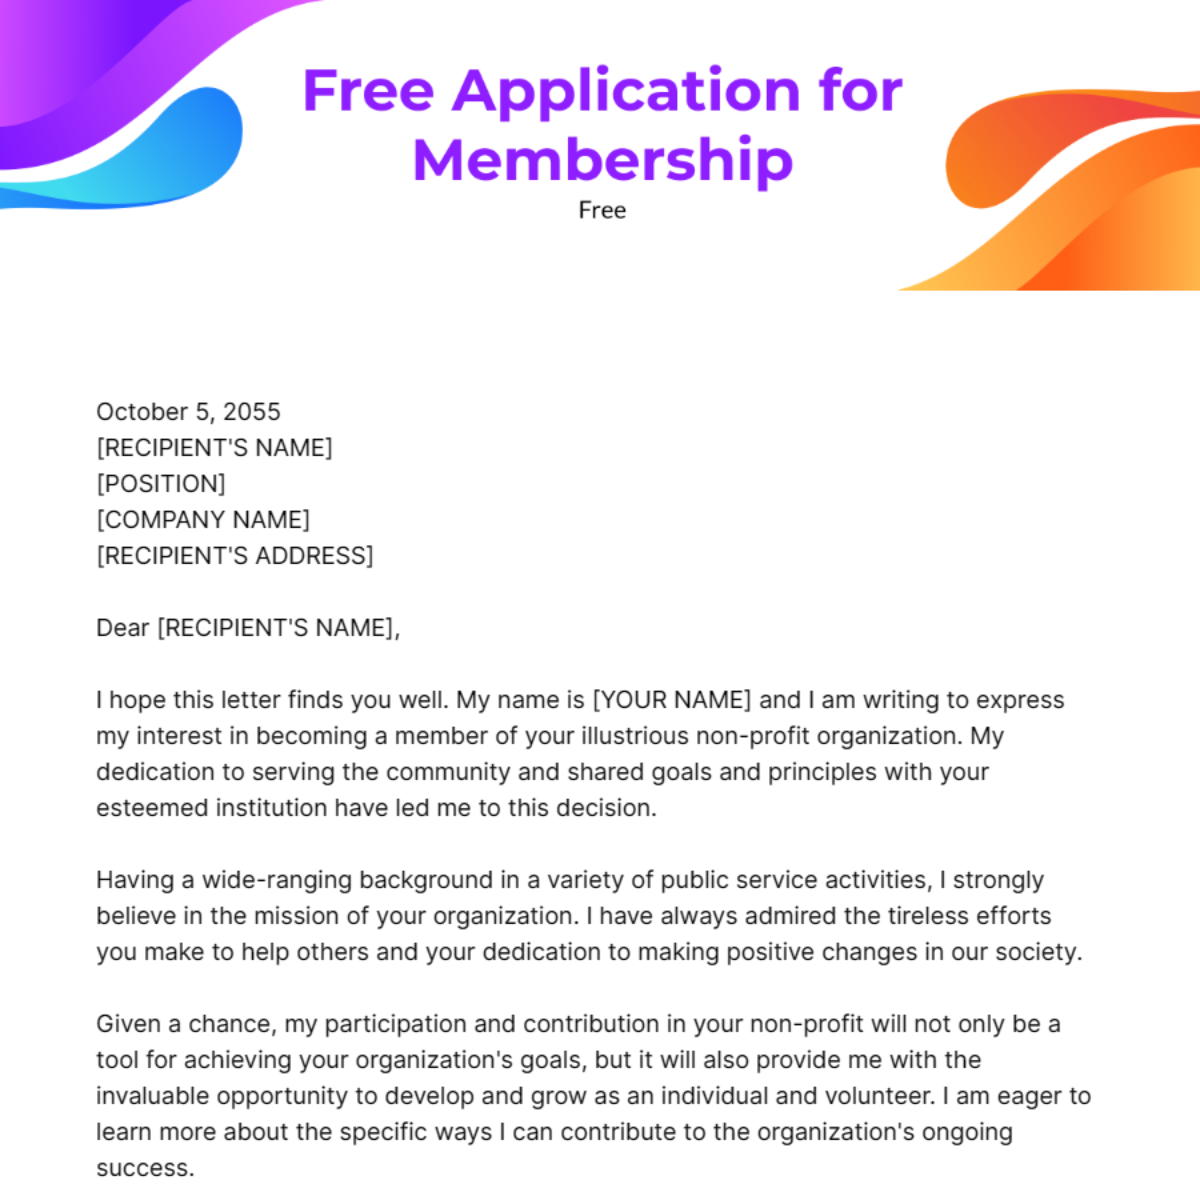 Application for Membership Letter Template